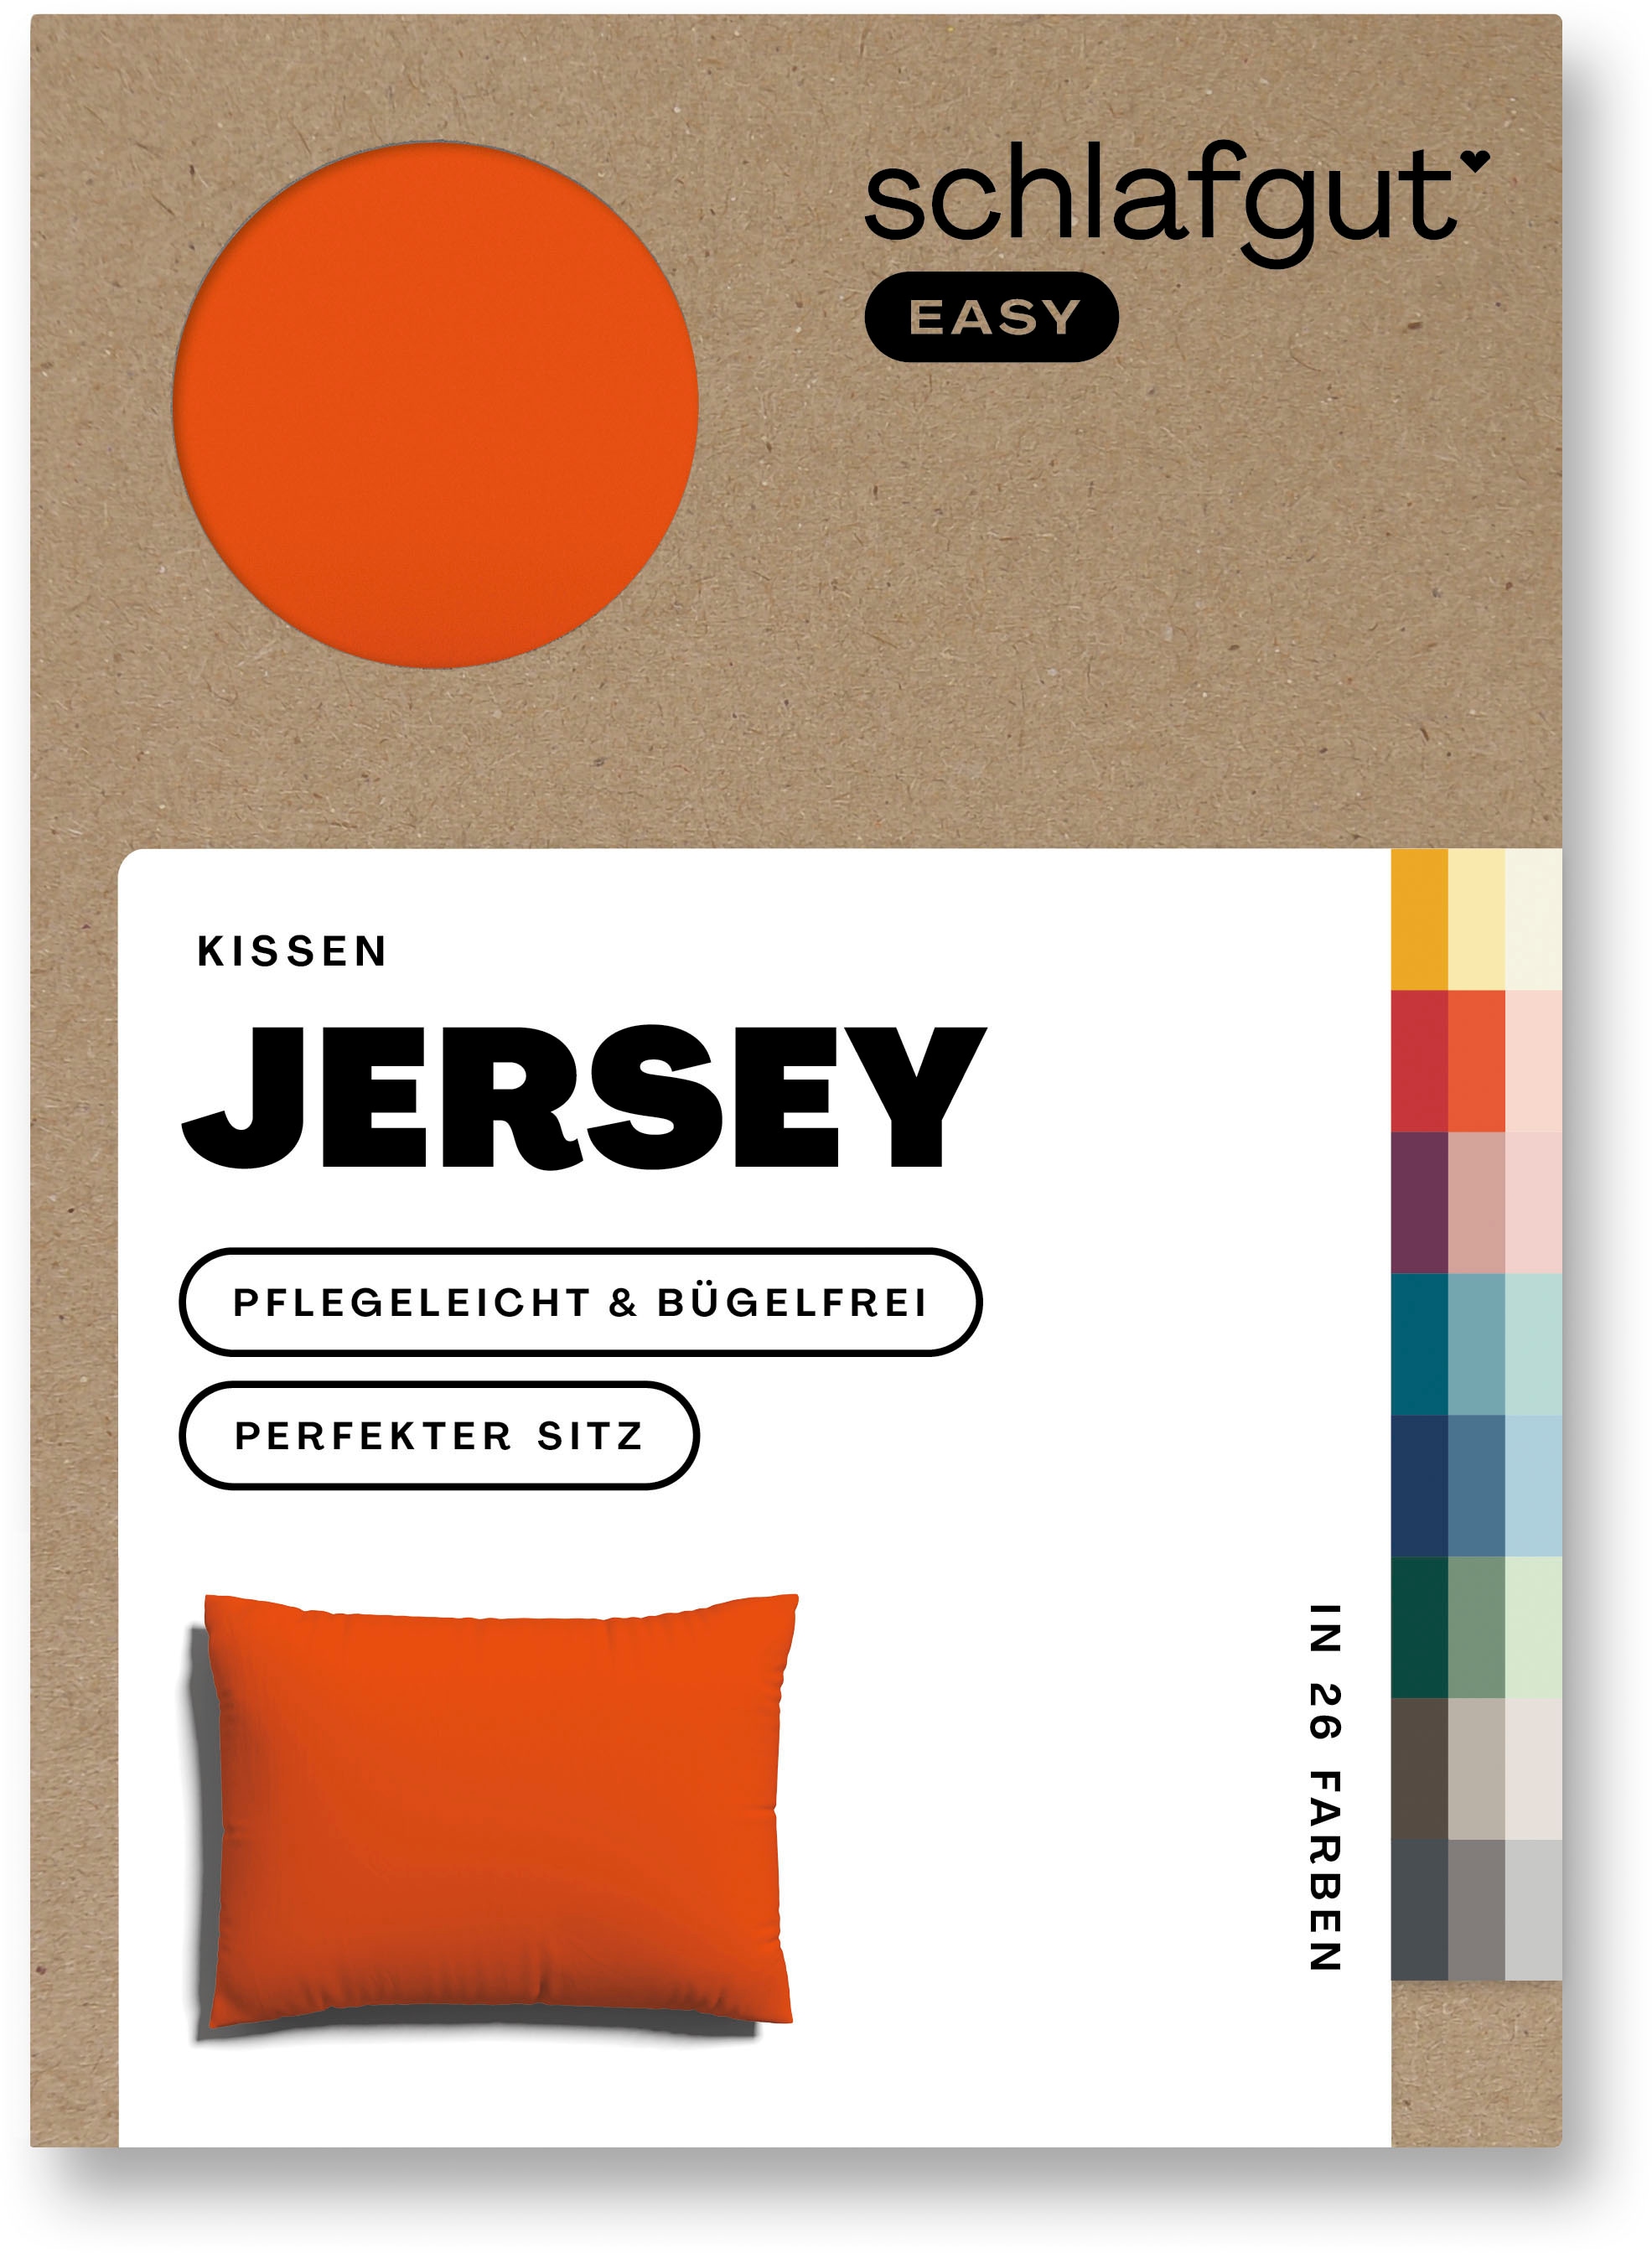 Schlafgut Kissenbezug »EASY Jersey«, (1 St.), Kissenhülle mit Reißverschluss, weich und saugfähig, Kissenbezug